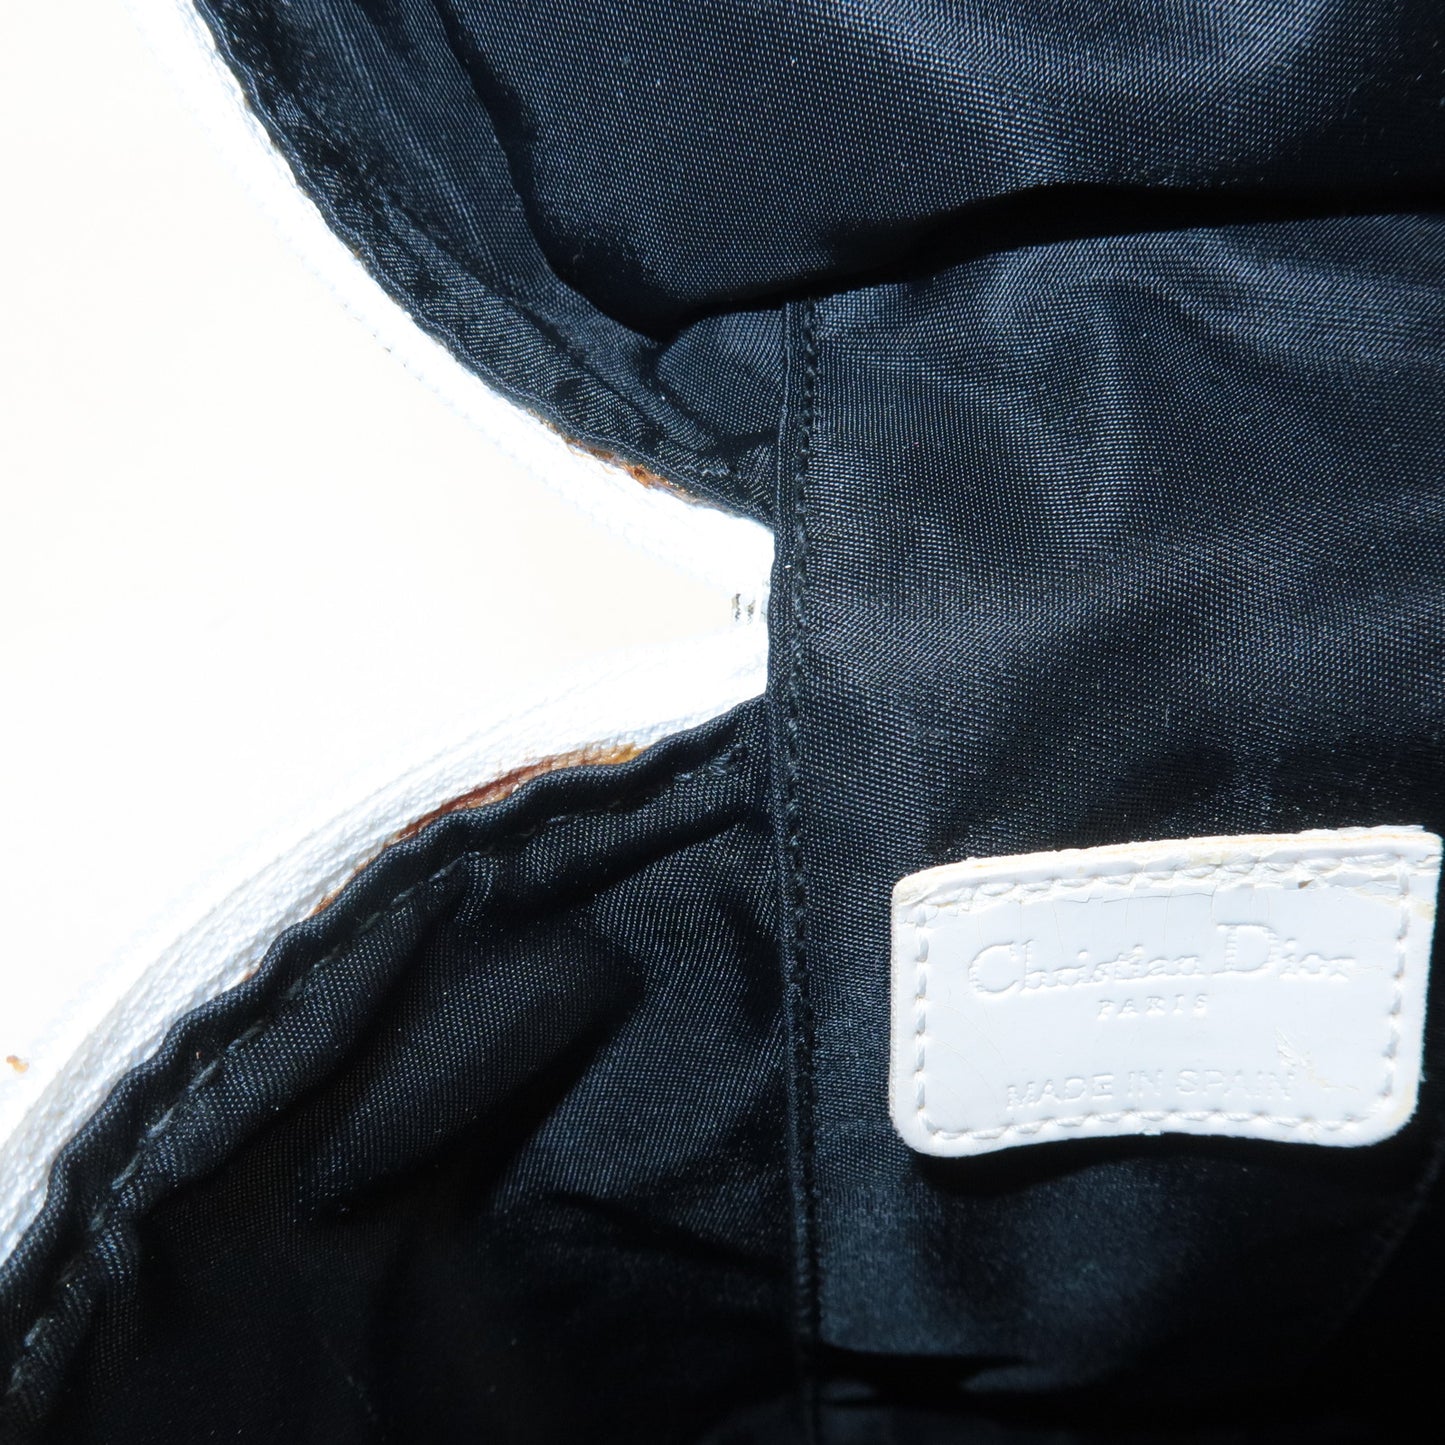 Christian Dior Trotter PVC Patent Leather Vanity Bag Black